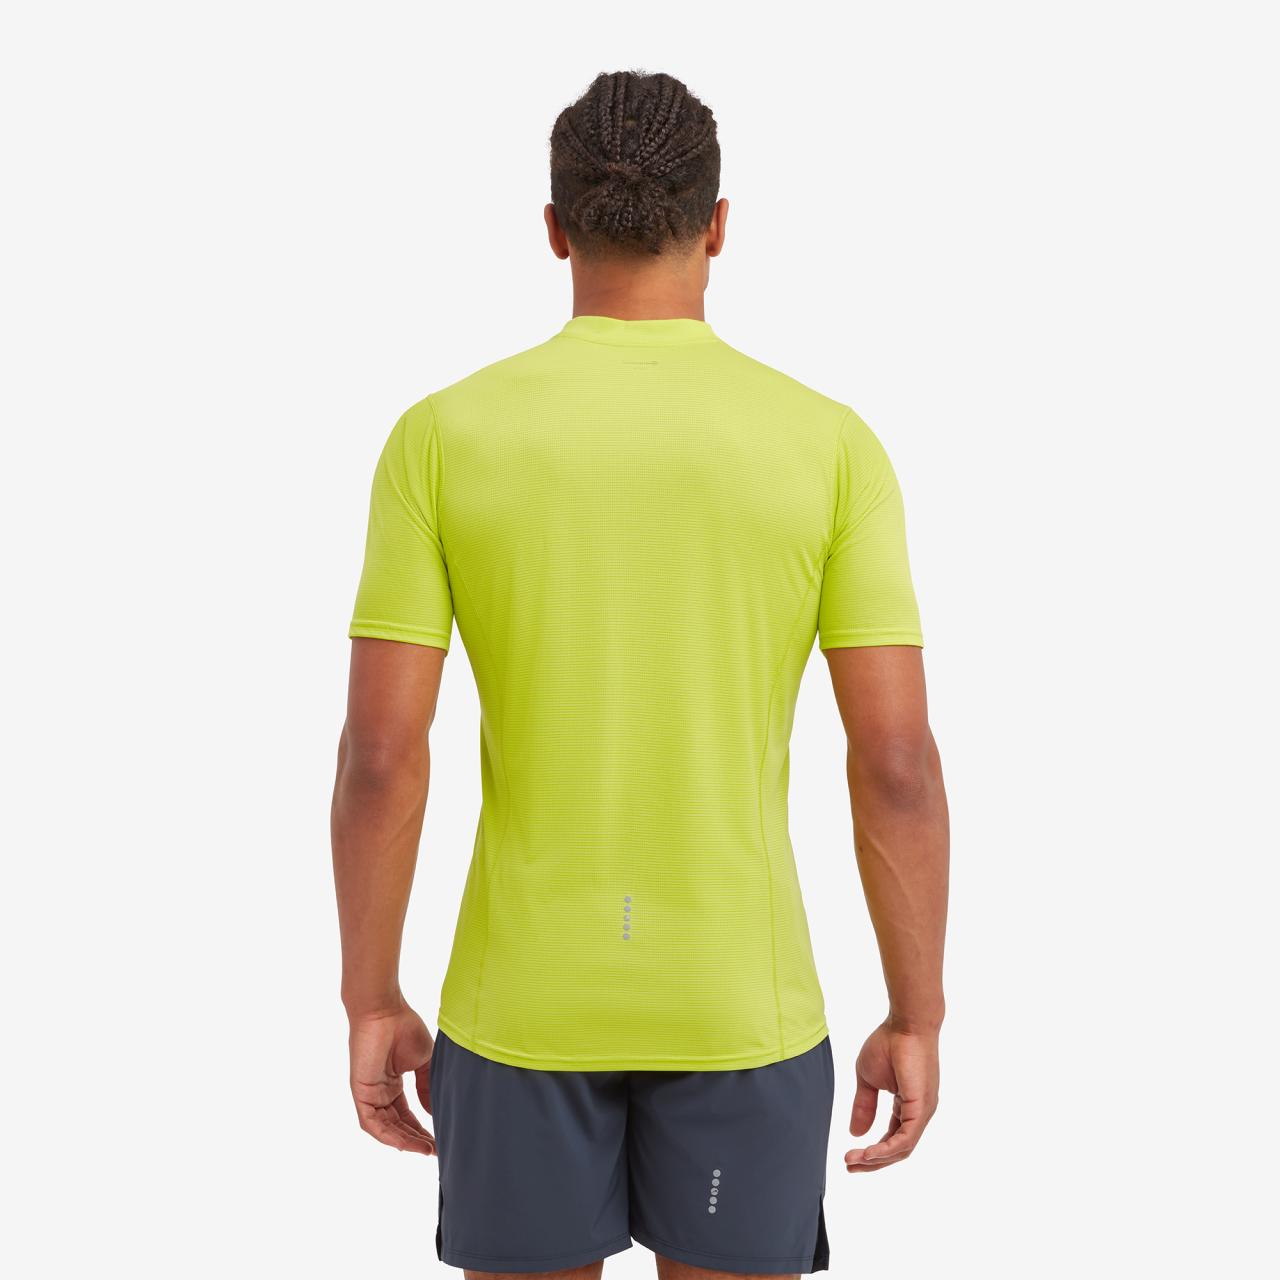 DART NANO ZIP T-SHIRT-CITRUS SPRING-XS pánské triko žlutozelené